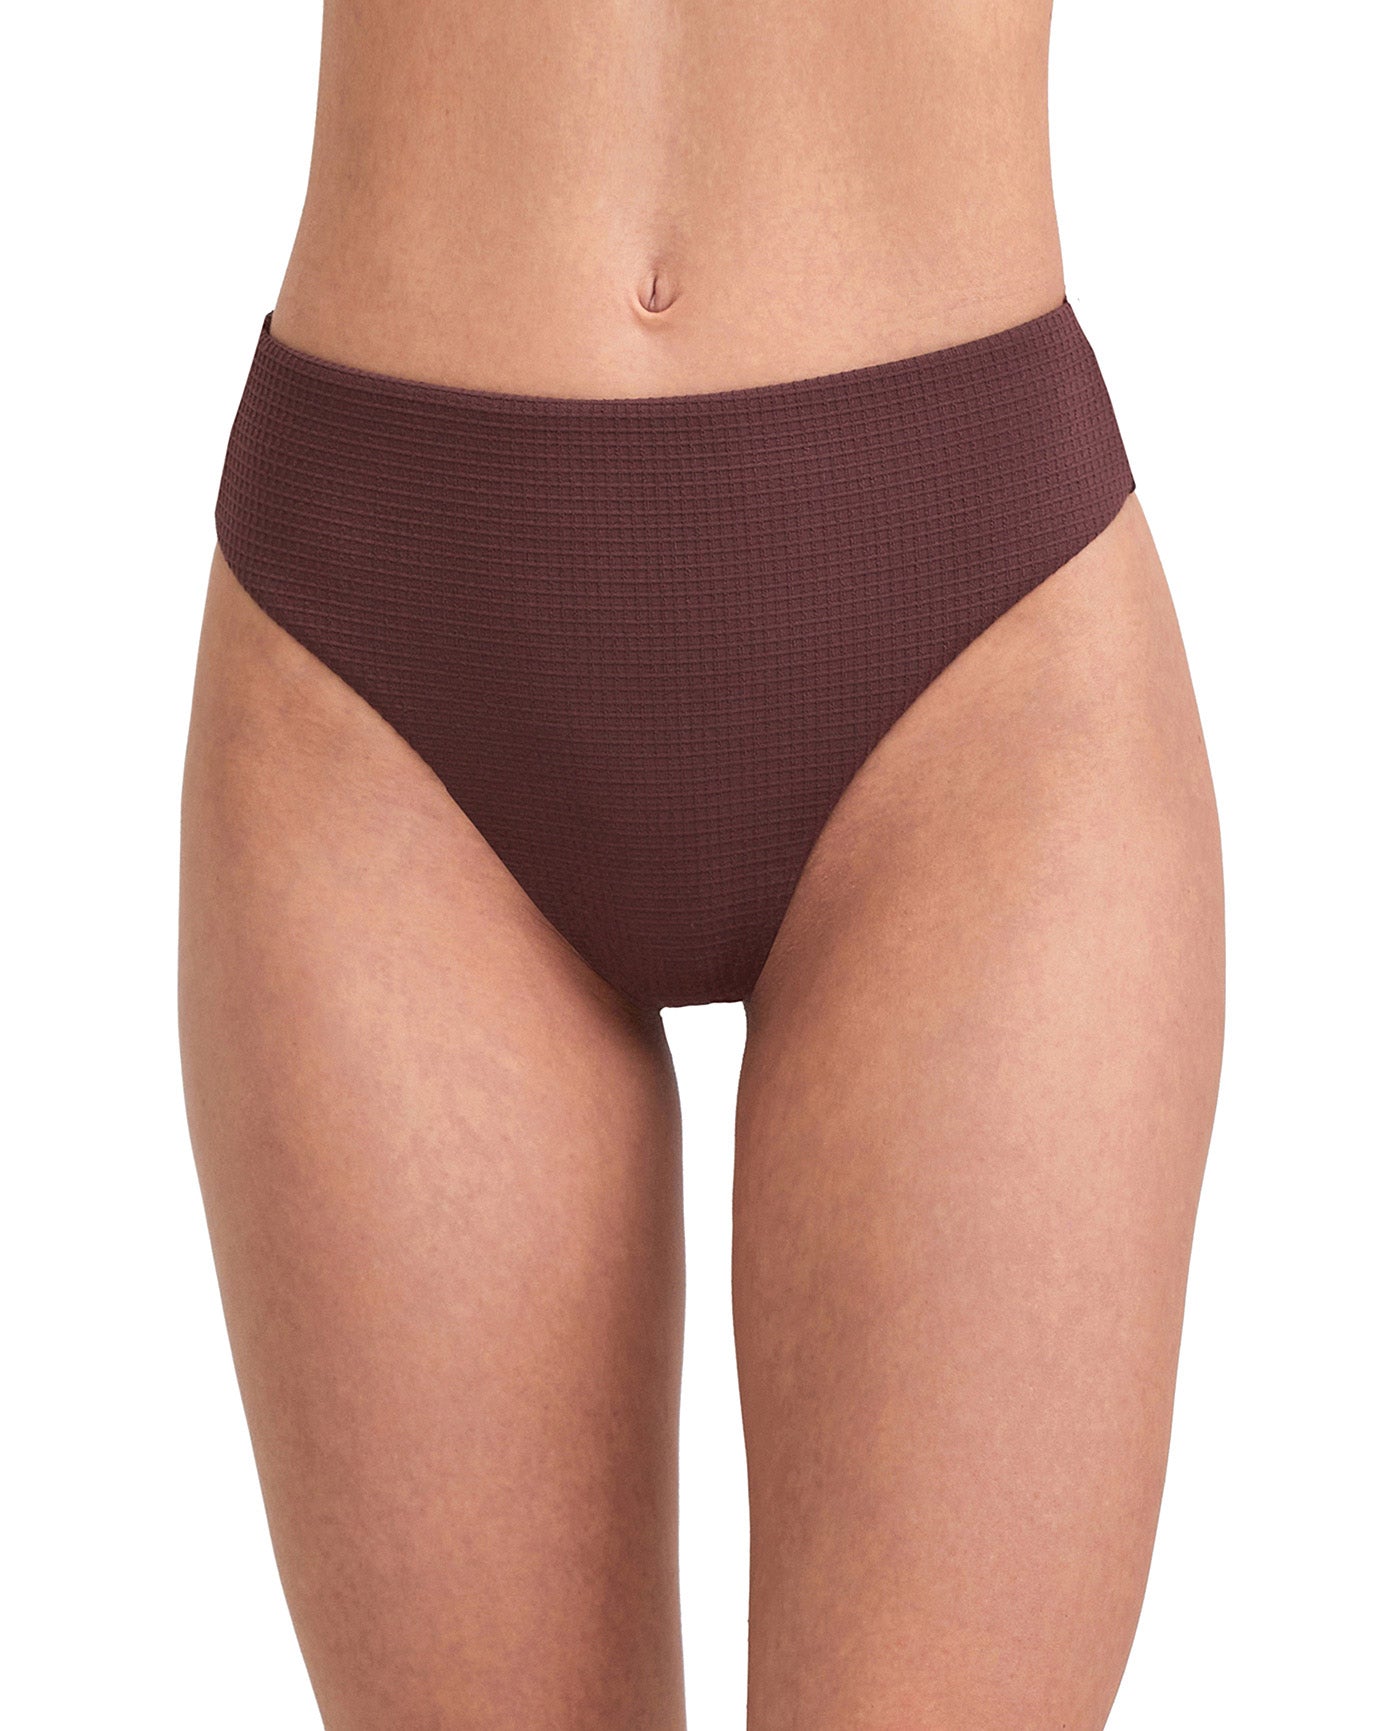 Front View Of Au Naturel Tyra Textured High Leg High Waist Bikini Bottom | AU NATUREL BRUNETTE TEXTURED